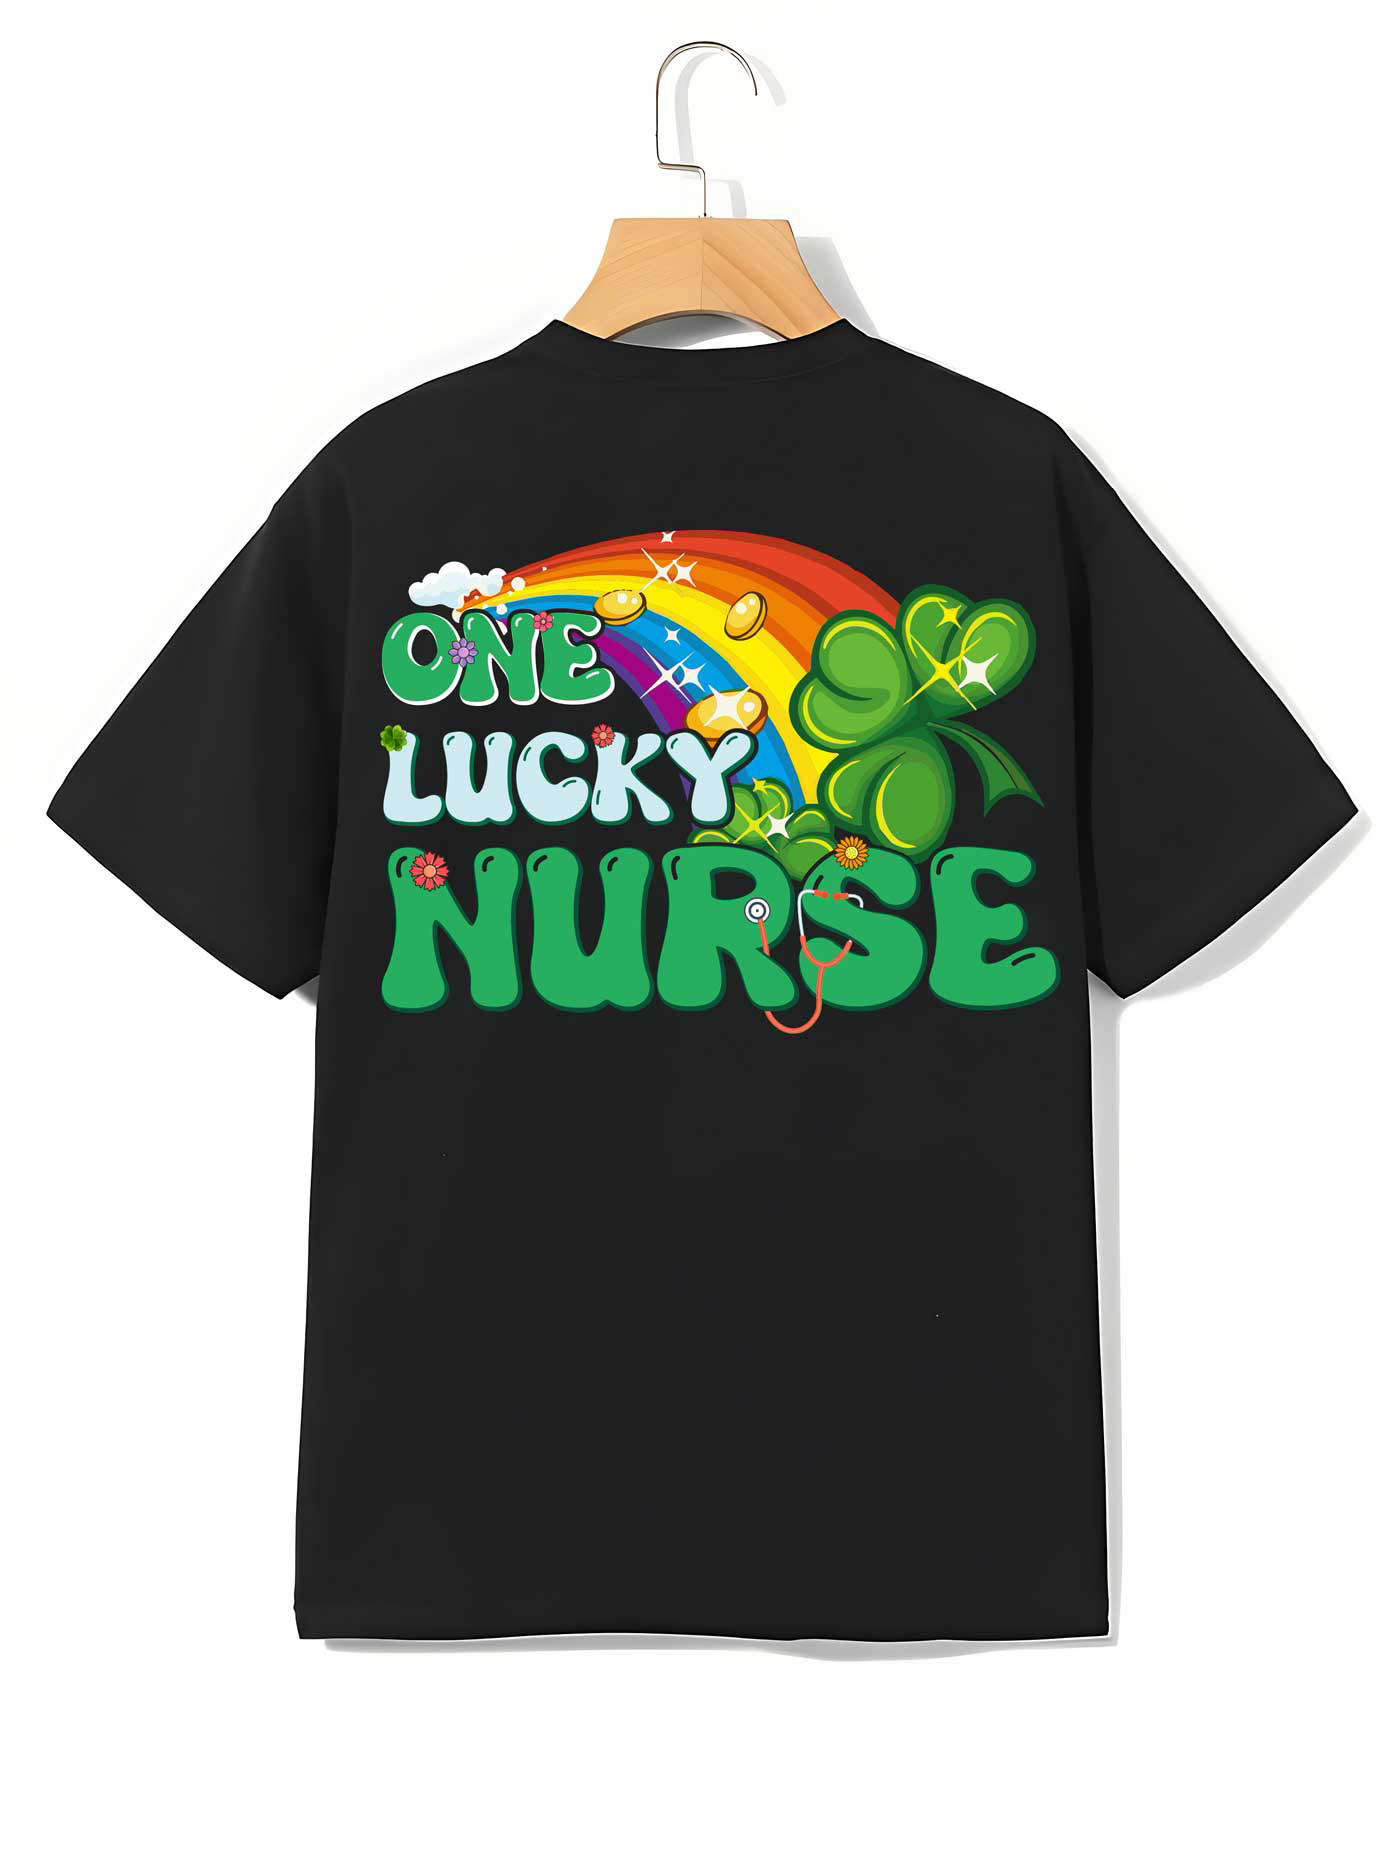 Patrick nurse nurse tee green Lucky Nurse nurse patrick's